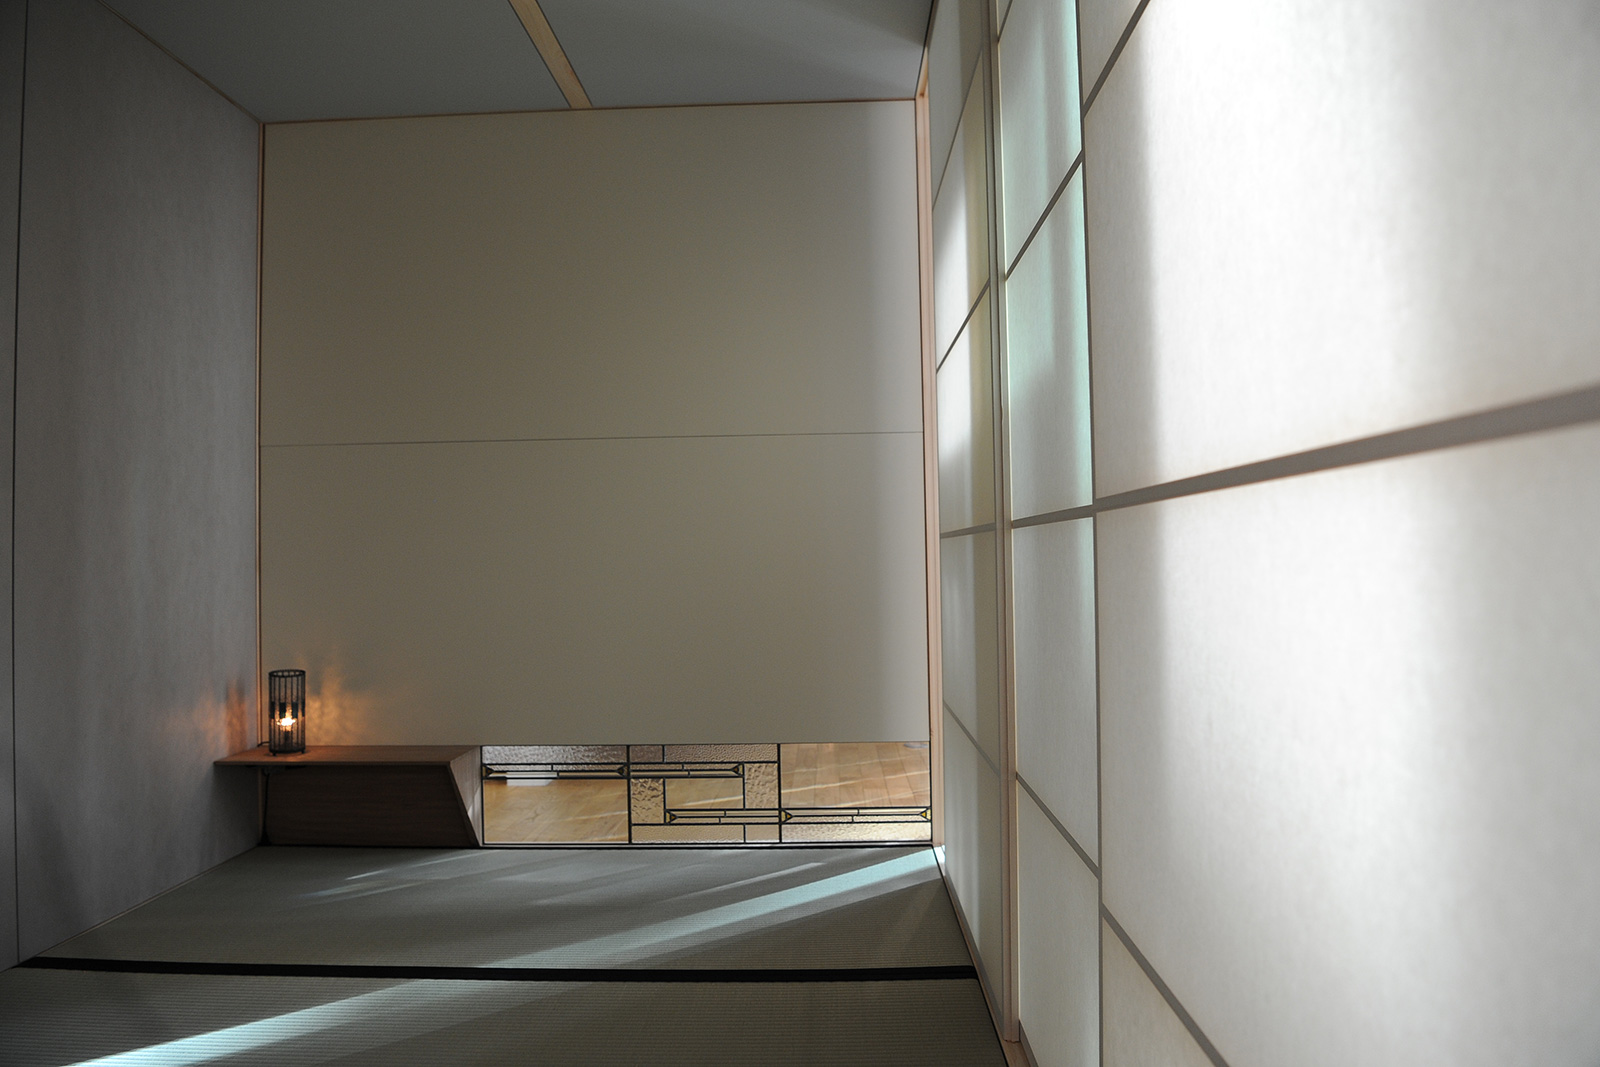 Japanese-style Room | Morizo Architectural Design Studio